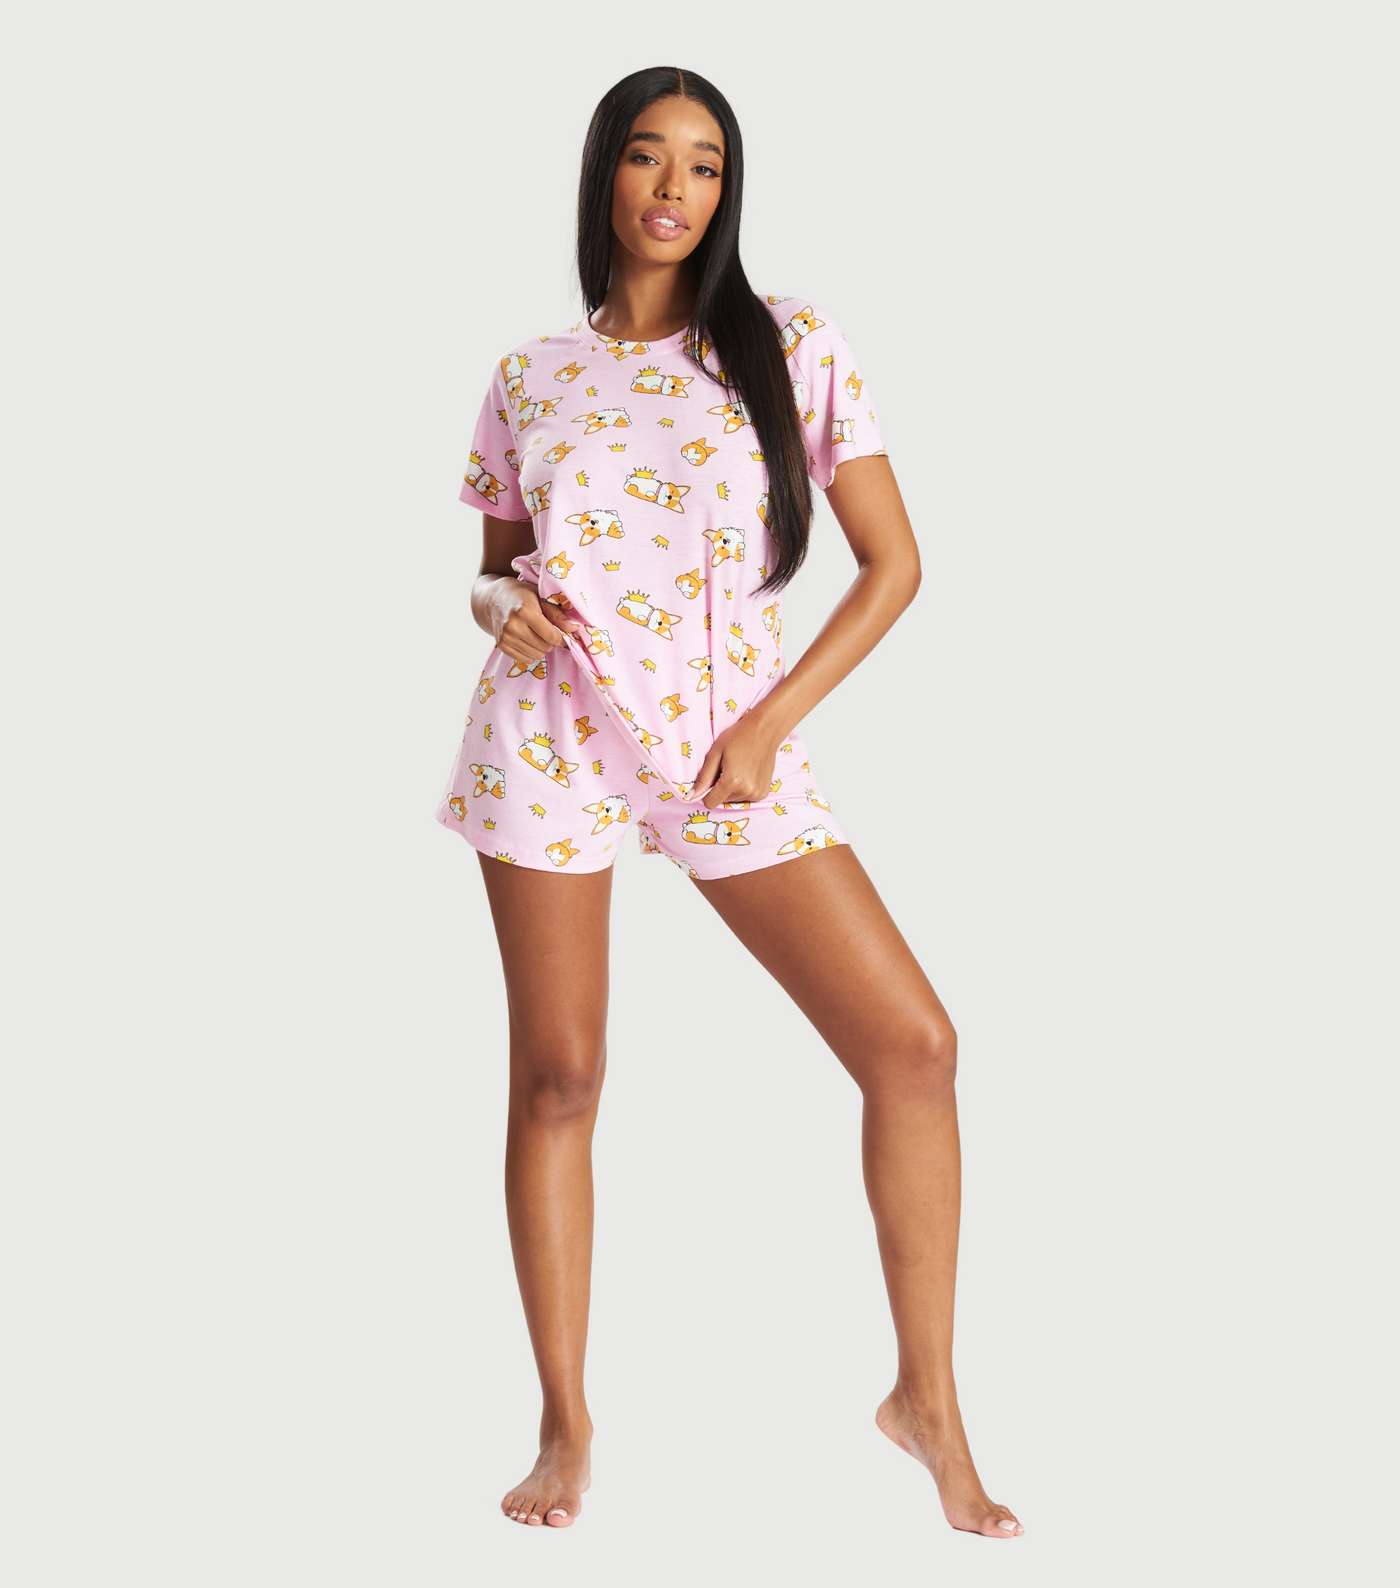 Loungeable Pink Short Pyjama Set with Corgi Print Image 2